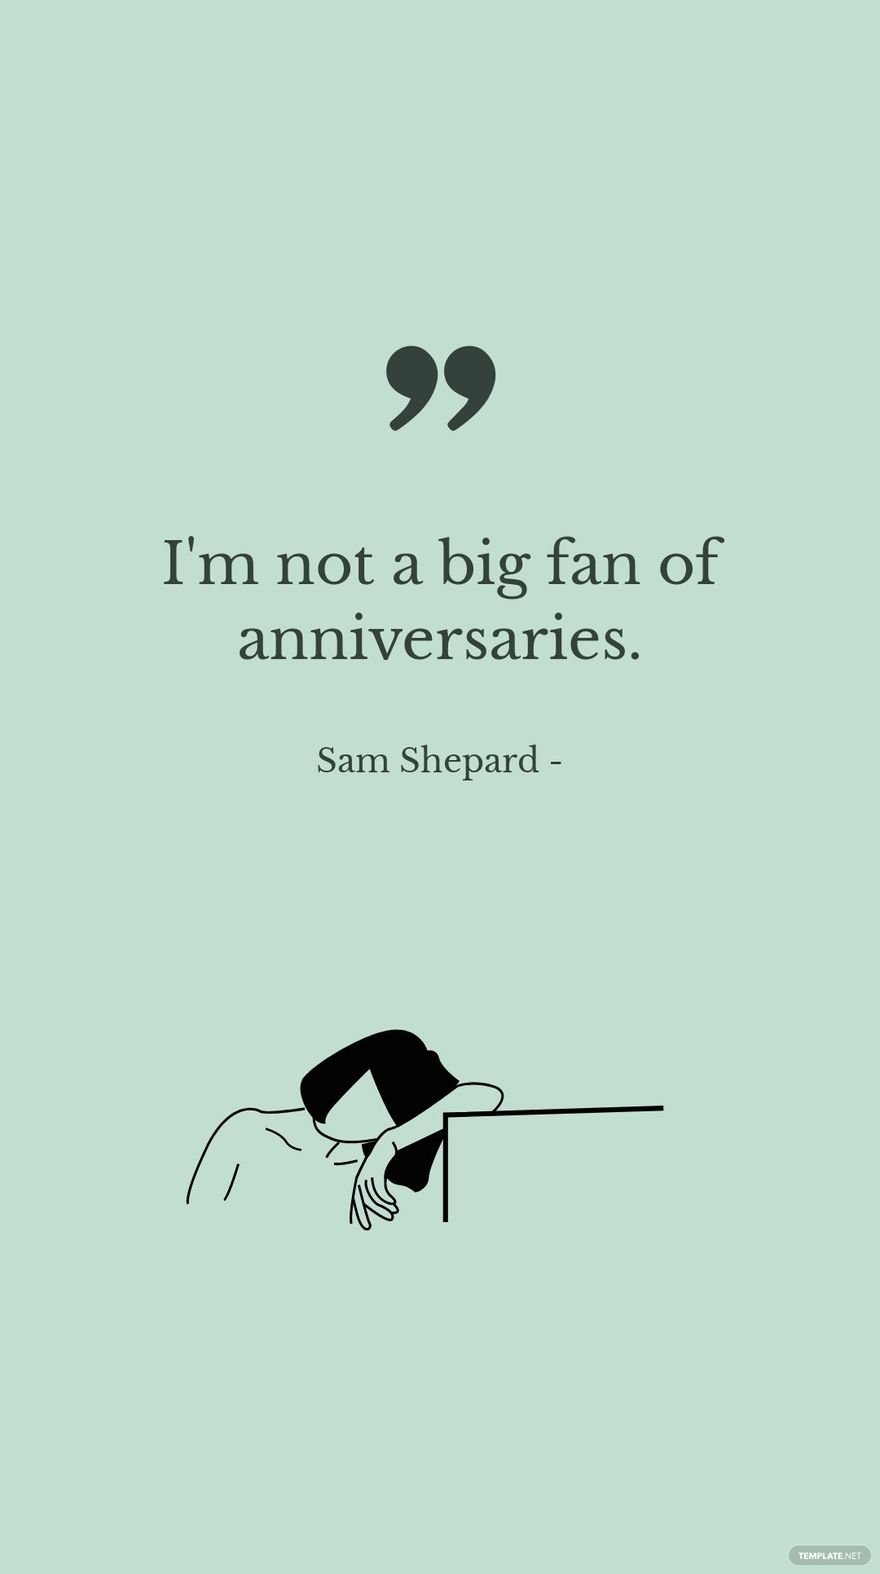 Free Sam Shepard - I'm not a big fan of anniversaries. in JPG